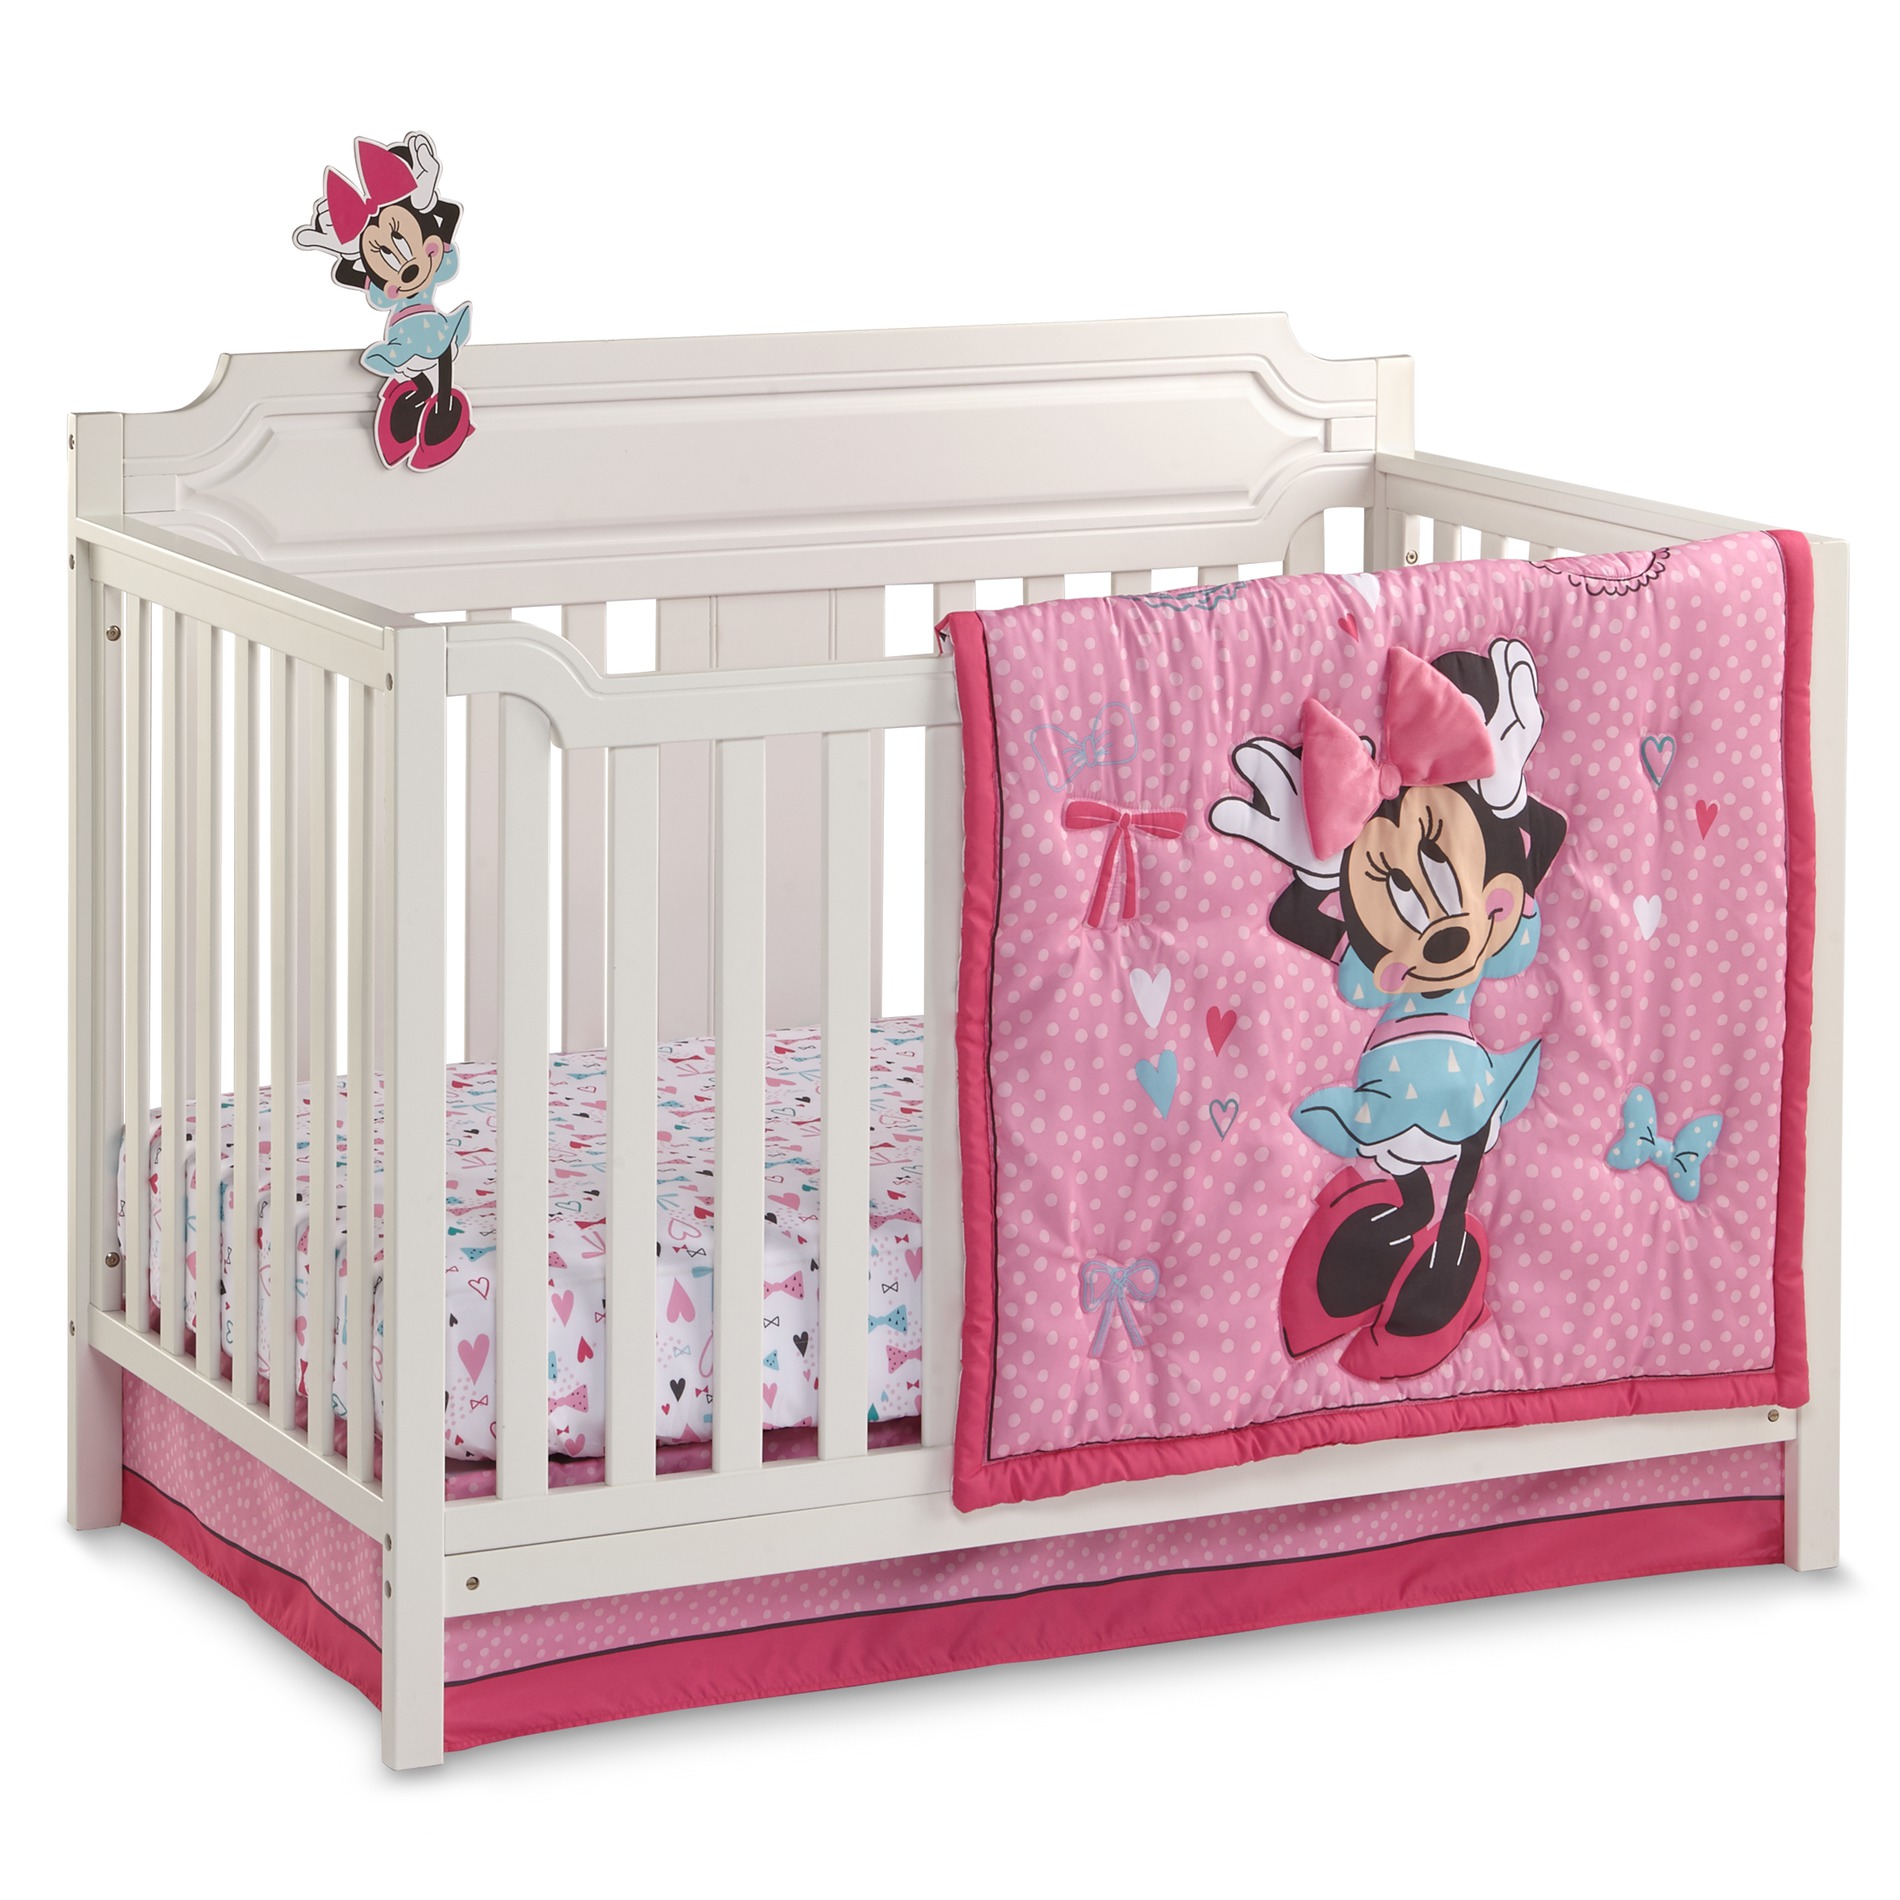 Disney Minnie Mouse Crib Bedding Set